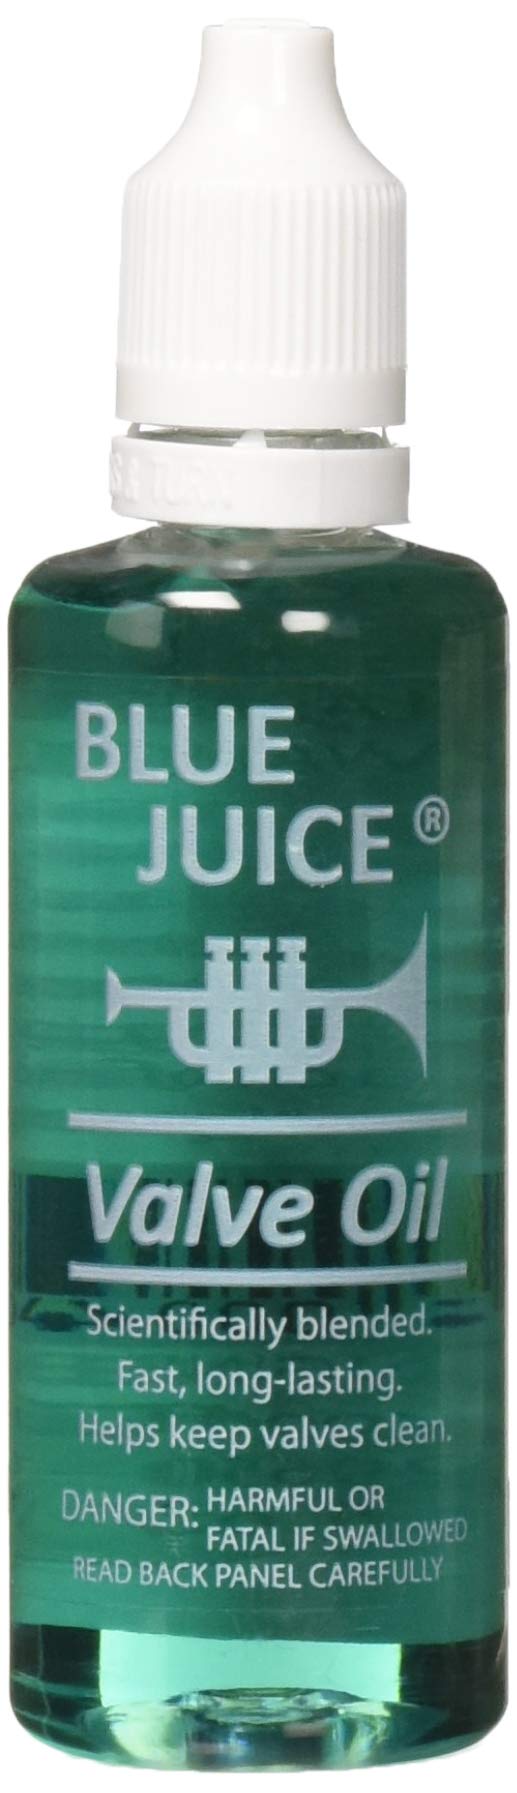 Blue Juice Valve Oil Pack 1